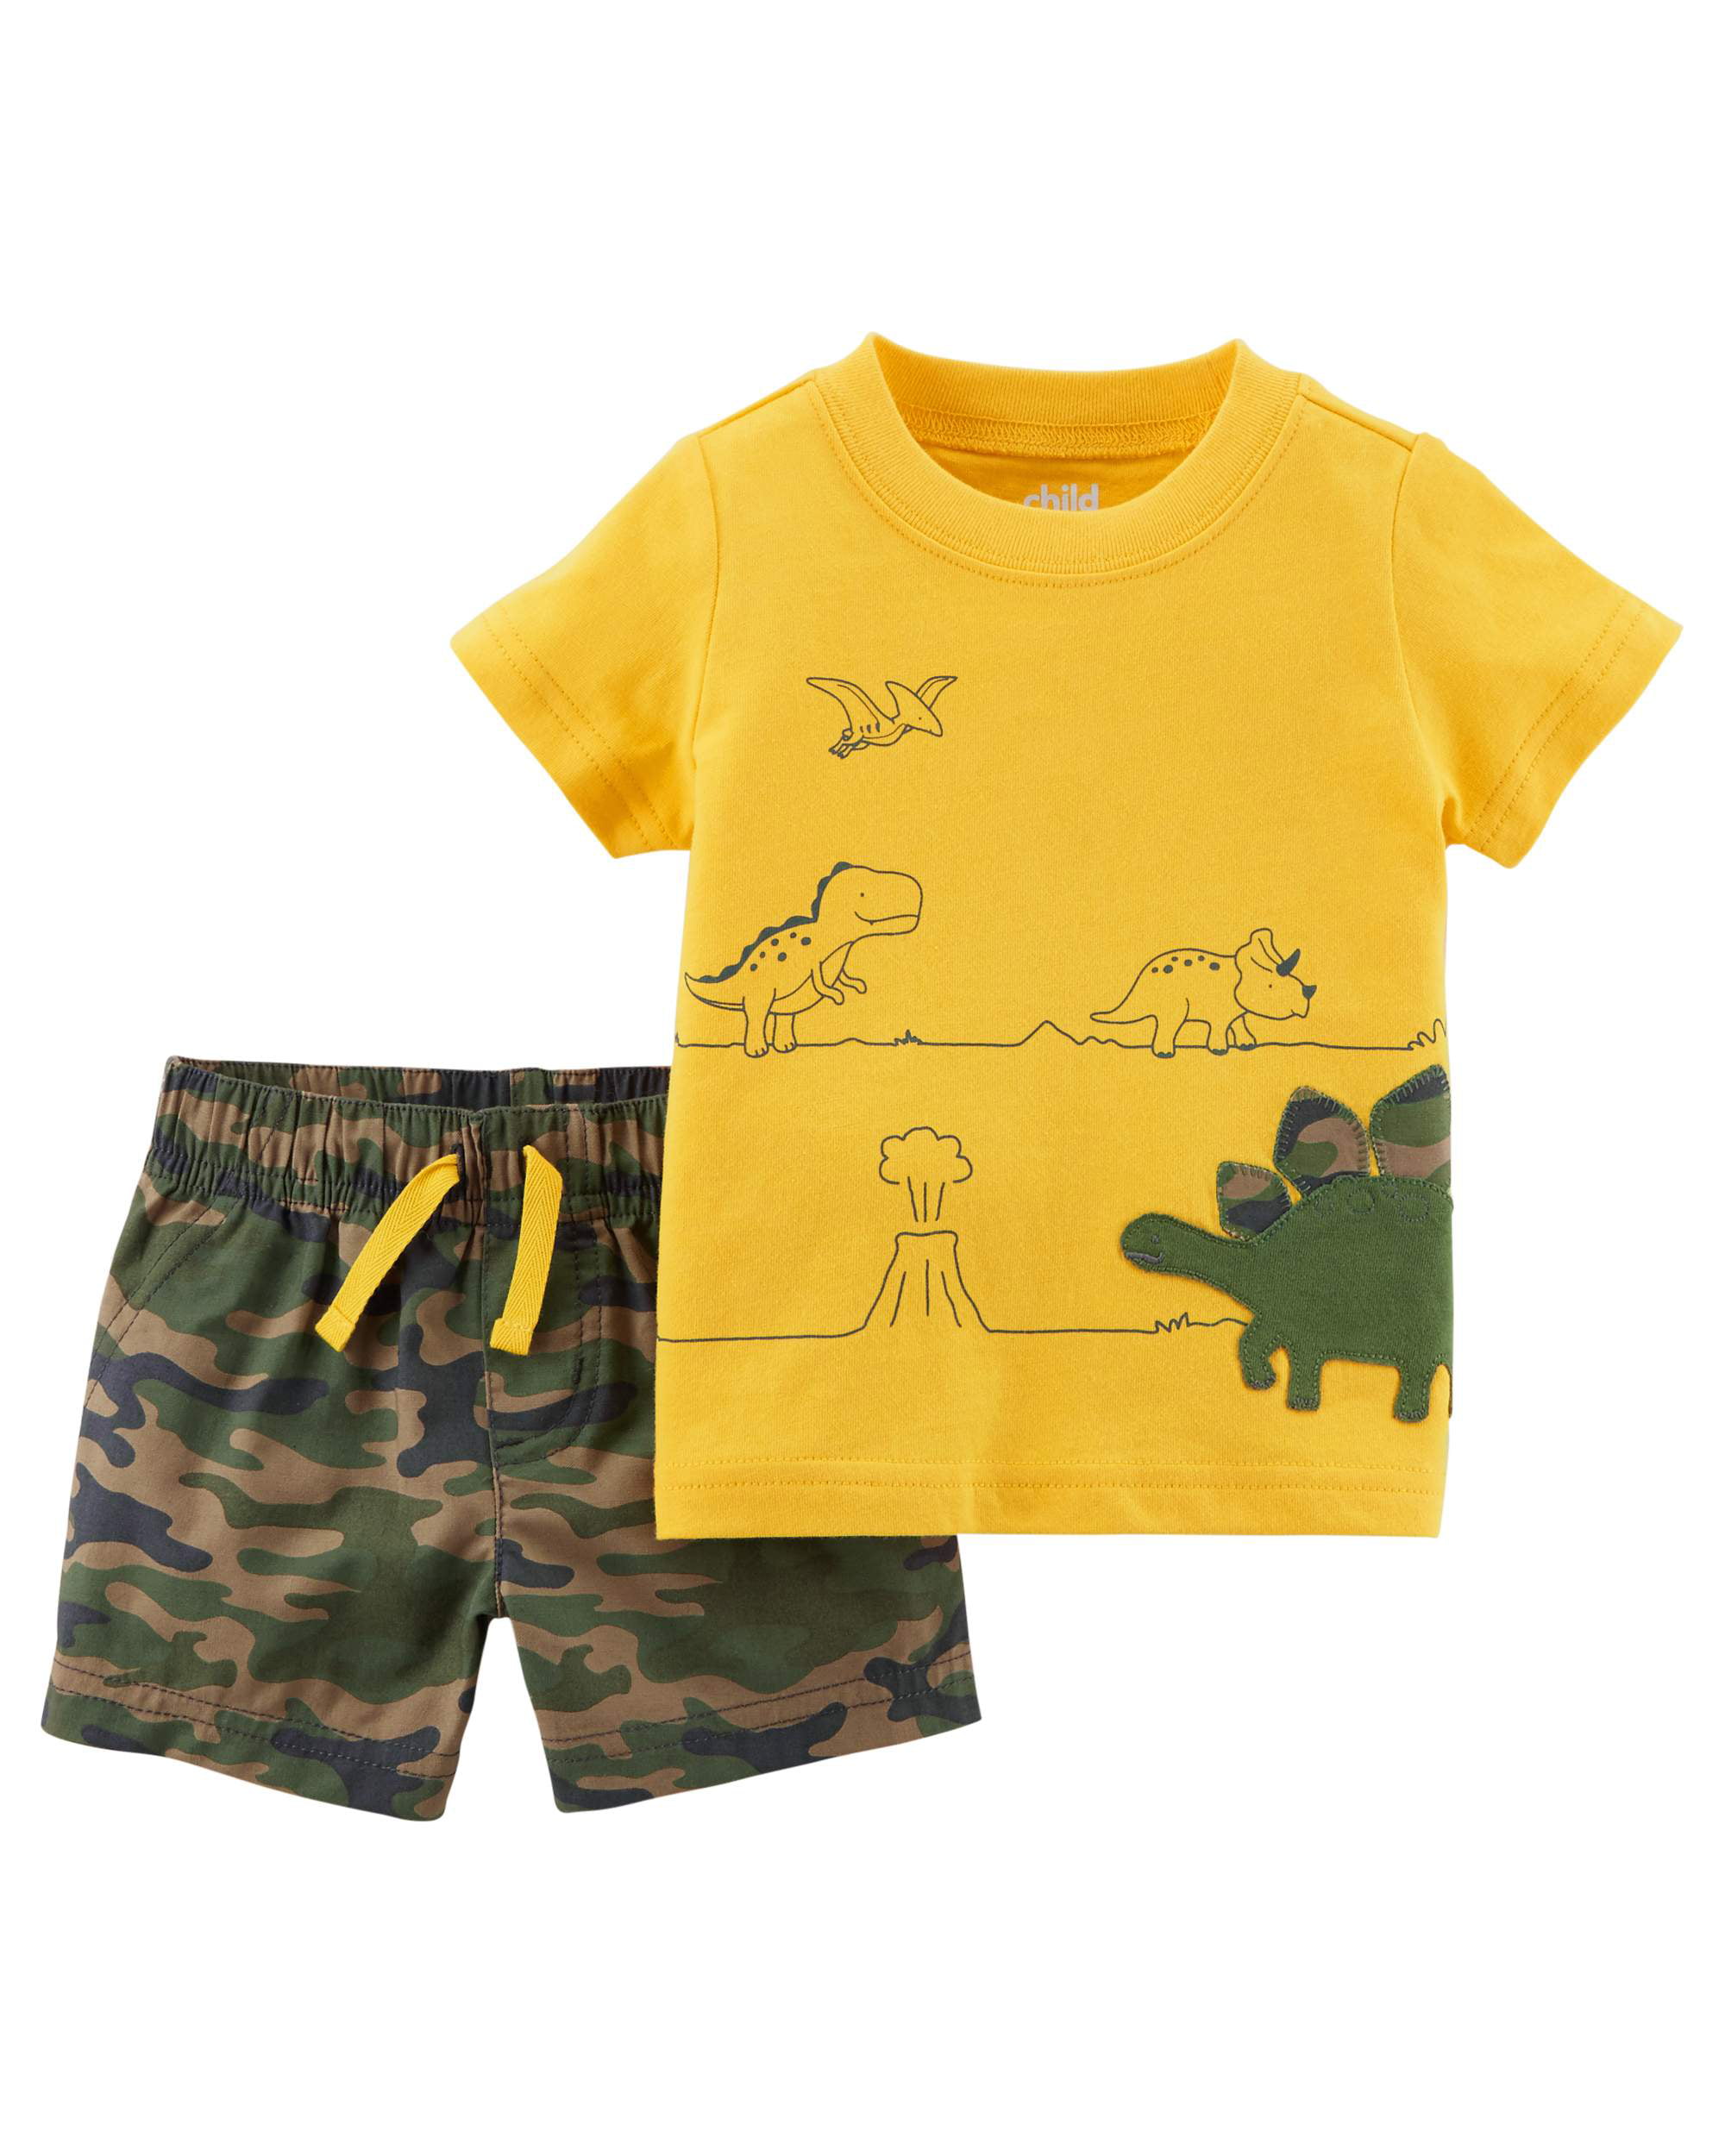 Baby Boy Short Sleeve Shirt & Shorts, 2pc Outfit Set - Walmart.com